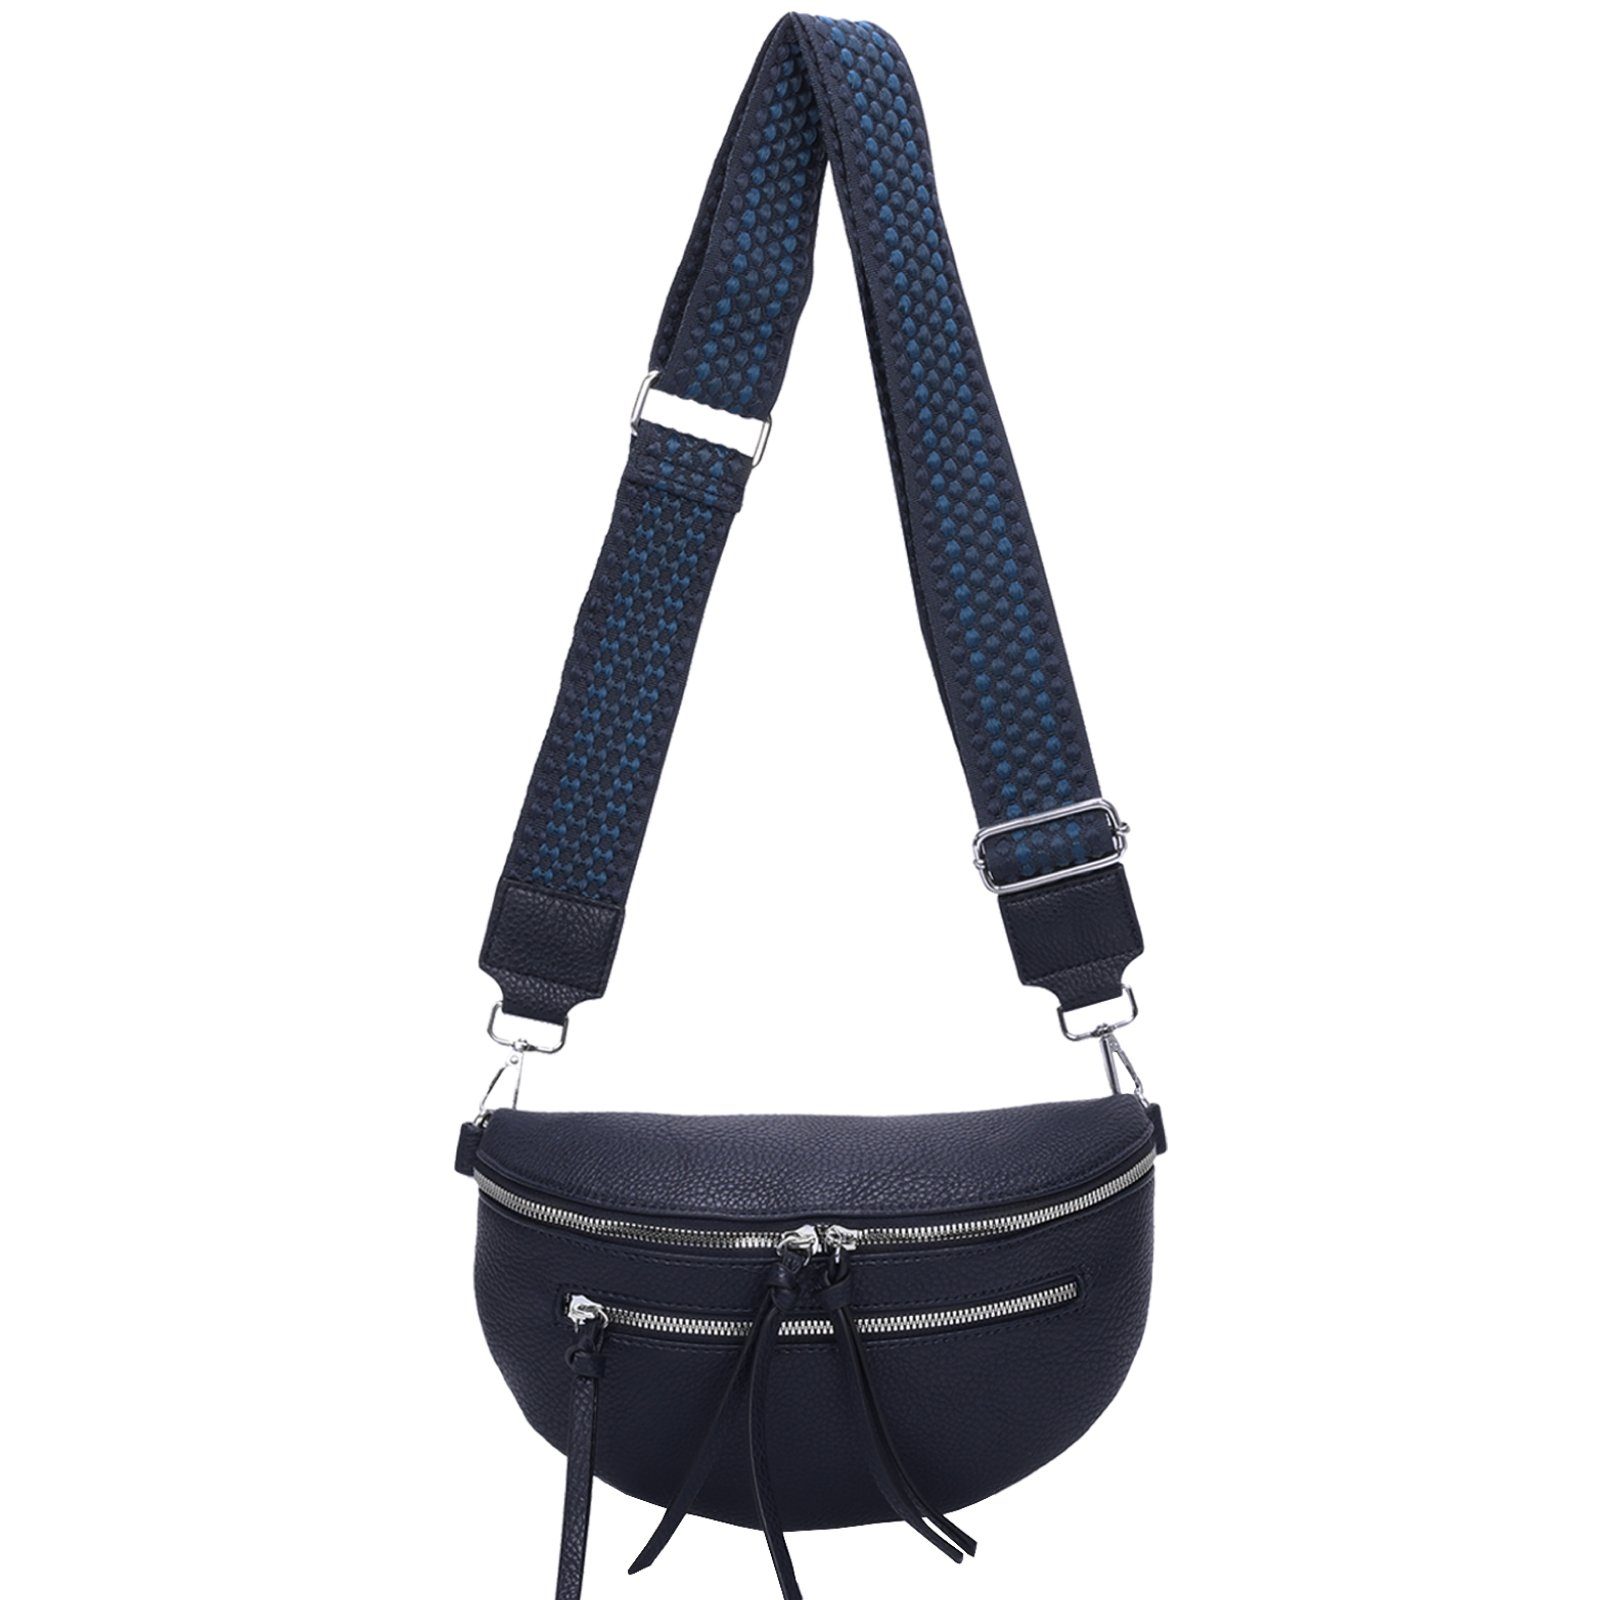 Crossbody-Bag CrossOver, EAAKIE Umhängetasche Kunstleder D.BLUE Bauchtasche Italy-De, tragbar Hüfttasche als Umhängetasche Schultertasche, Gürteltasche